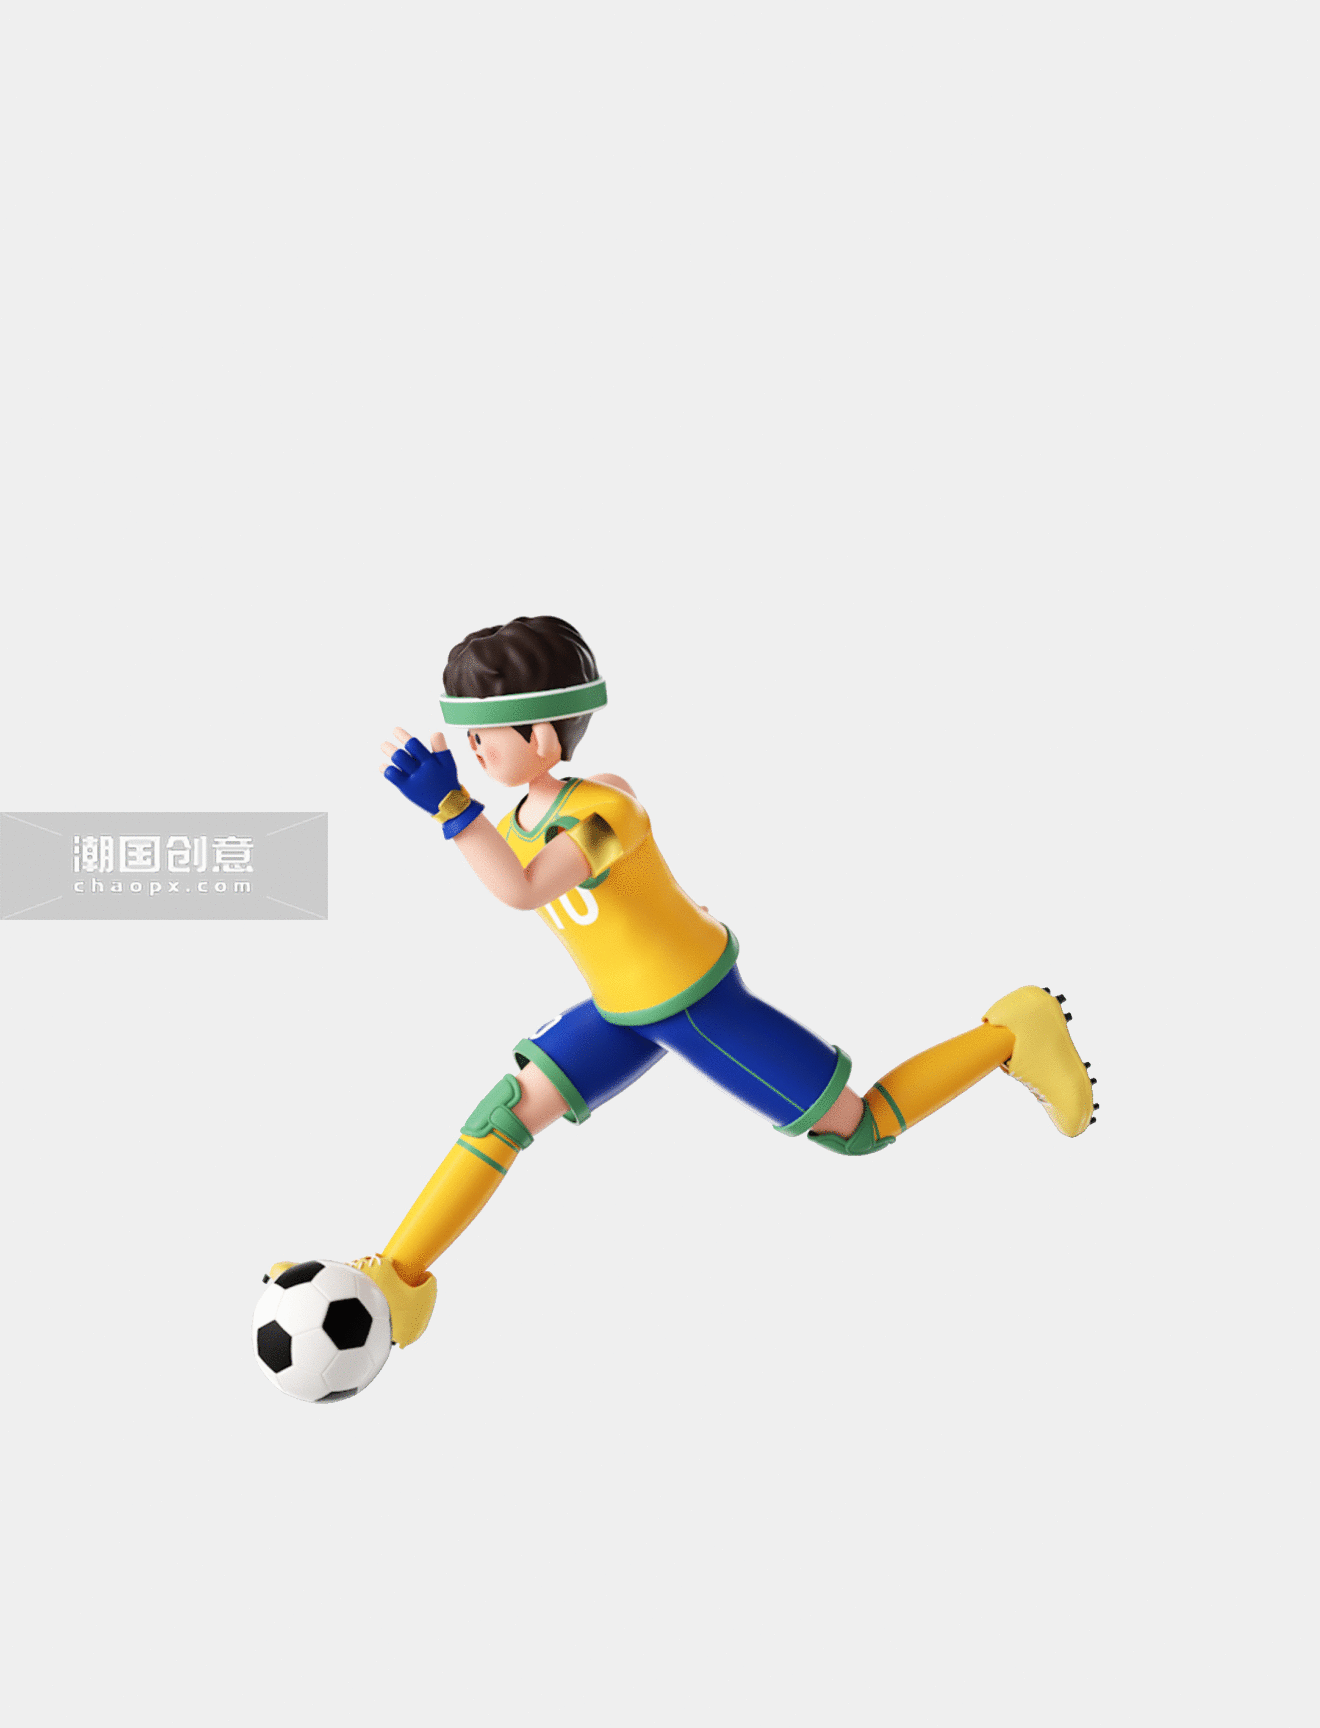 C4D立体世界杯足球赛事比赛足球运动员跑步向前带球3D动图gif